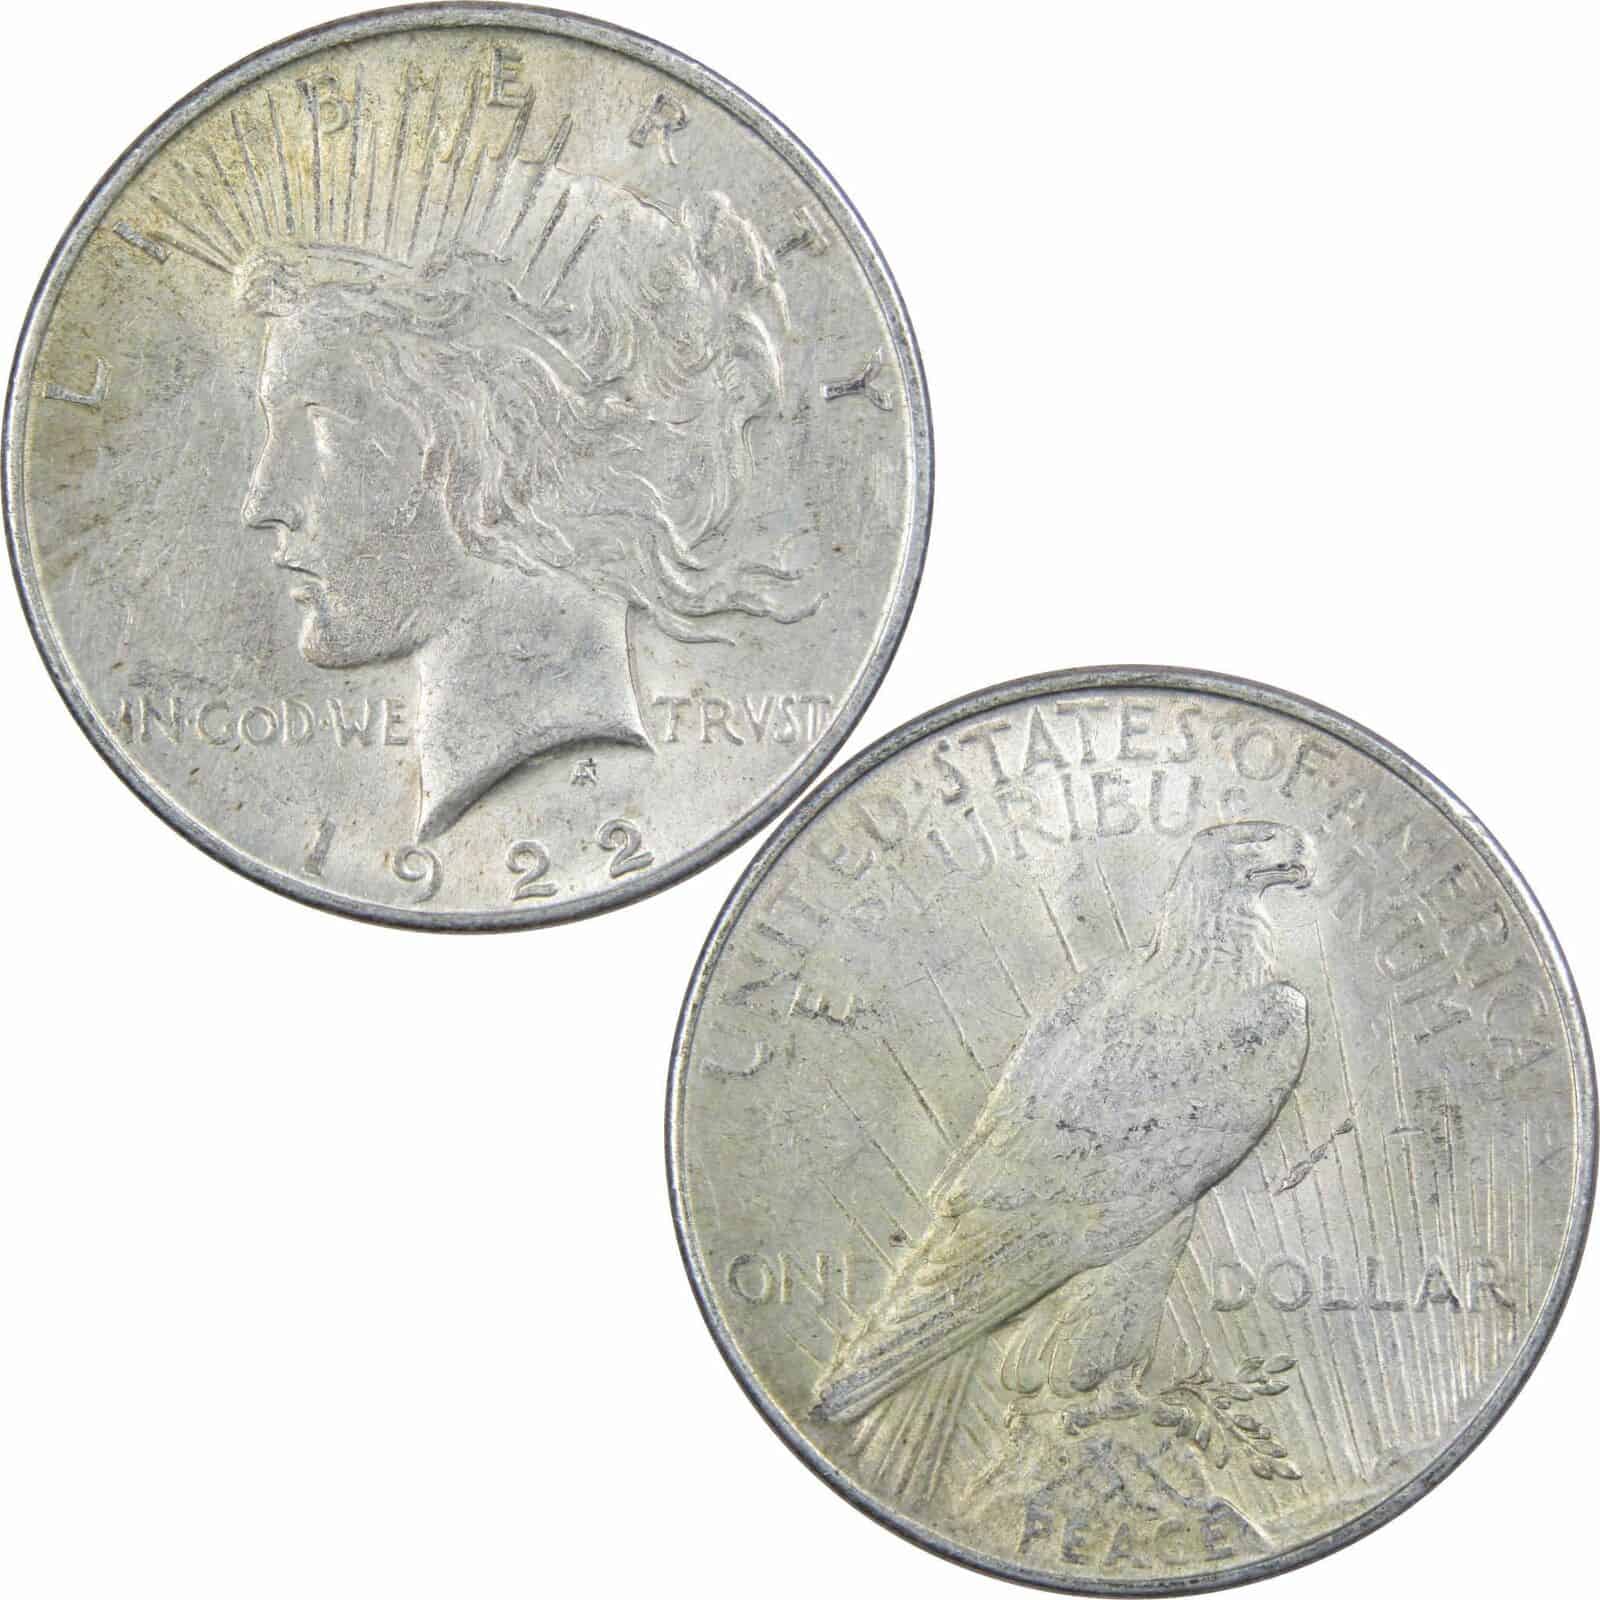 1922 Silver Dollar Die Break in Reverse